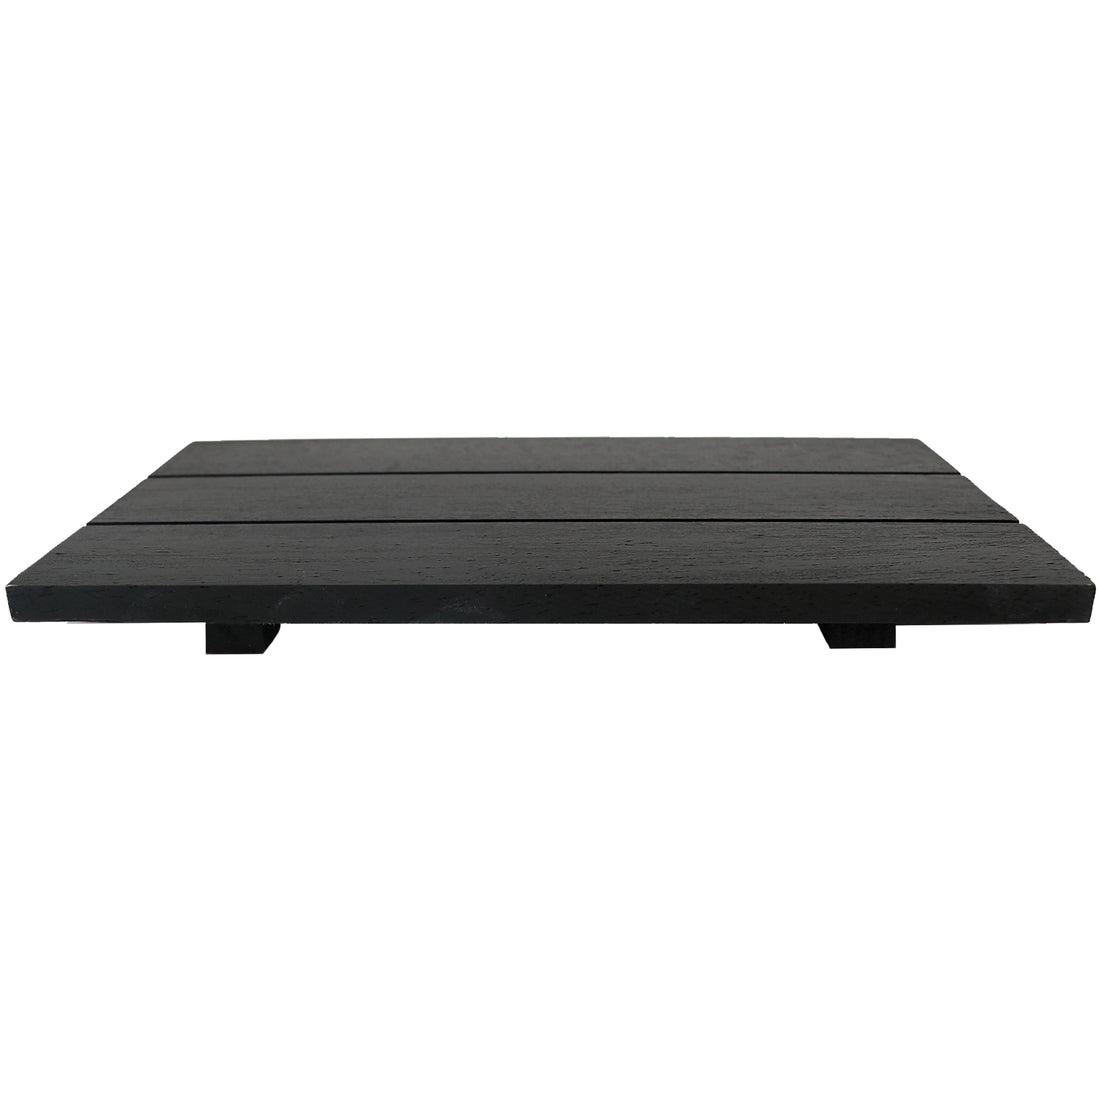 Rectangular Wood Tray - Black - 9x4.75"